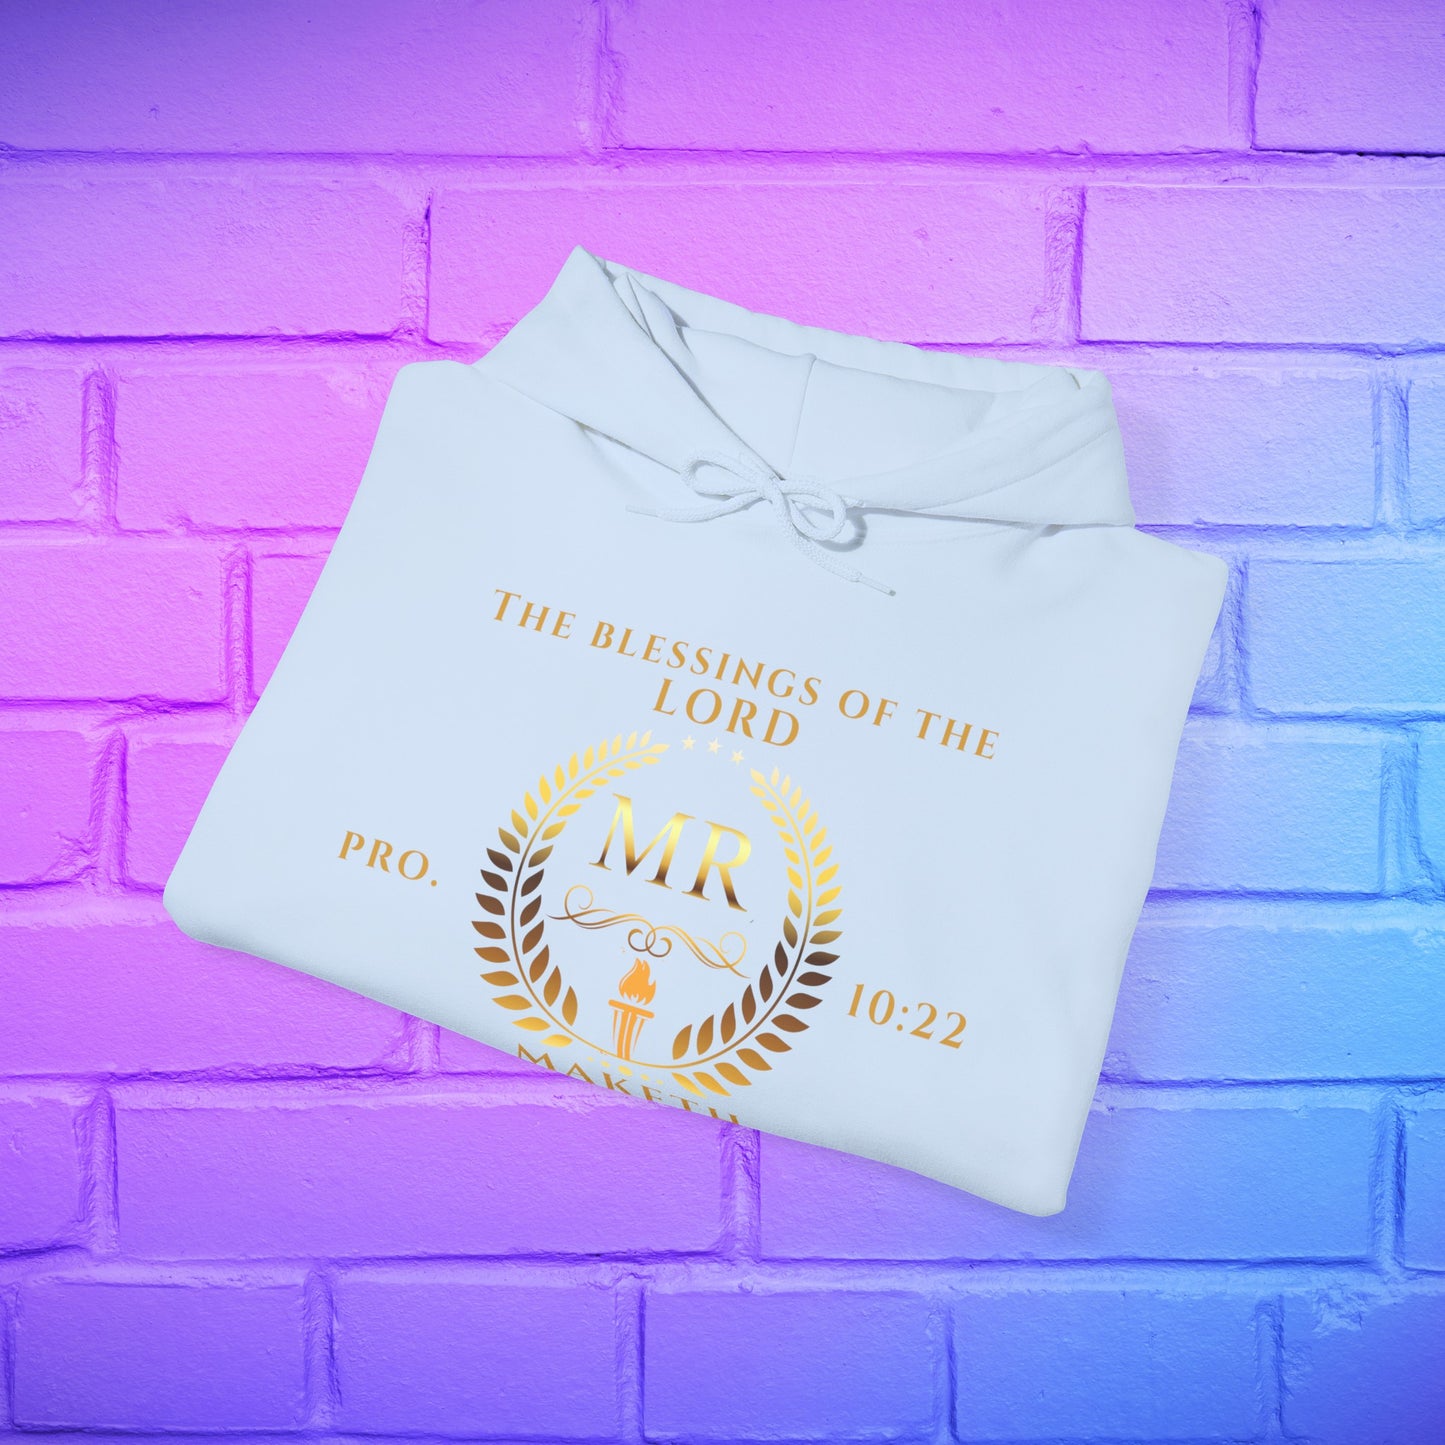 "Maketh Rich" Collection: Proverbs 10:22 Men's Heavy Blend™ Hoodie Sweatshirt